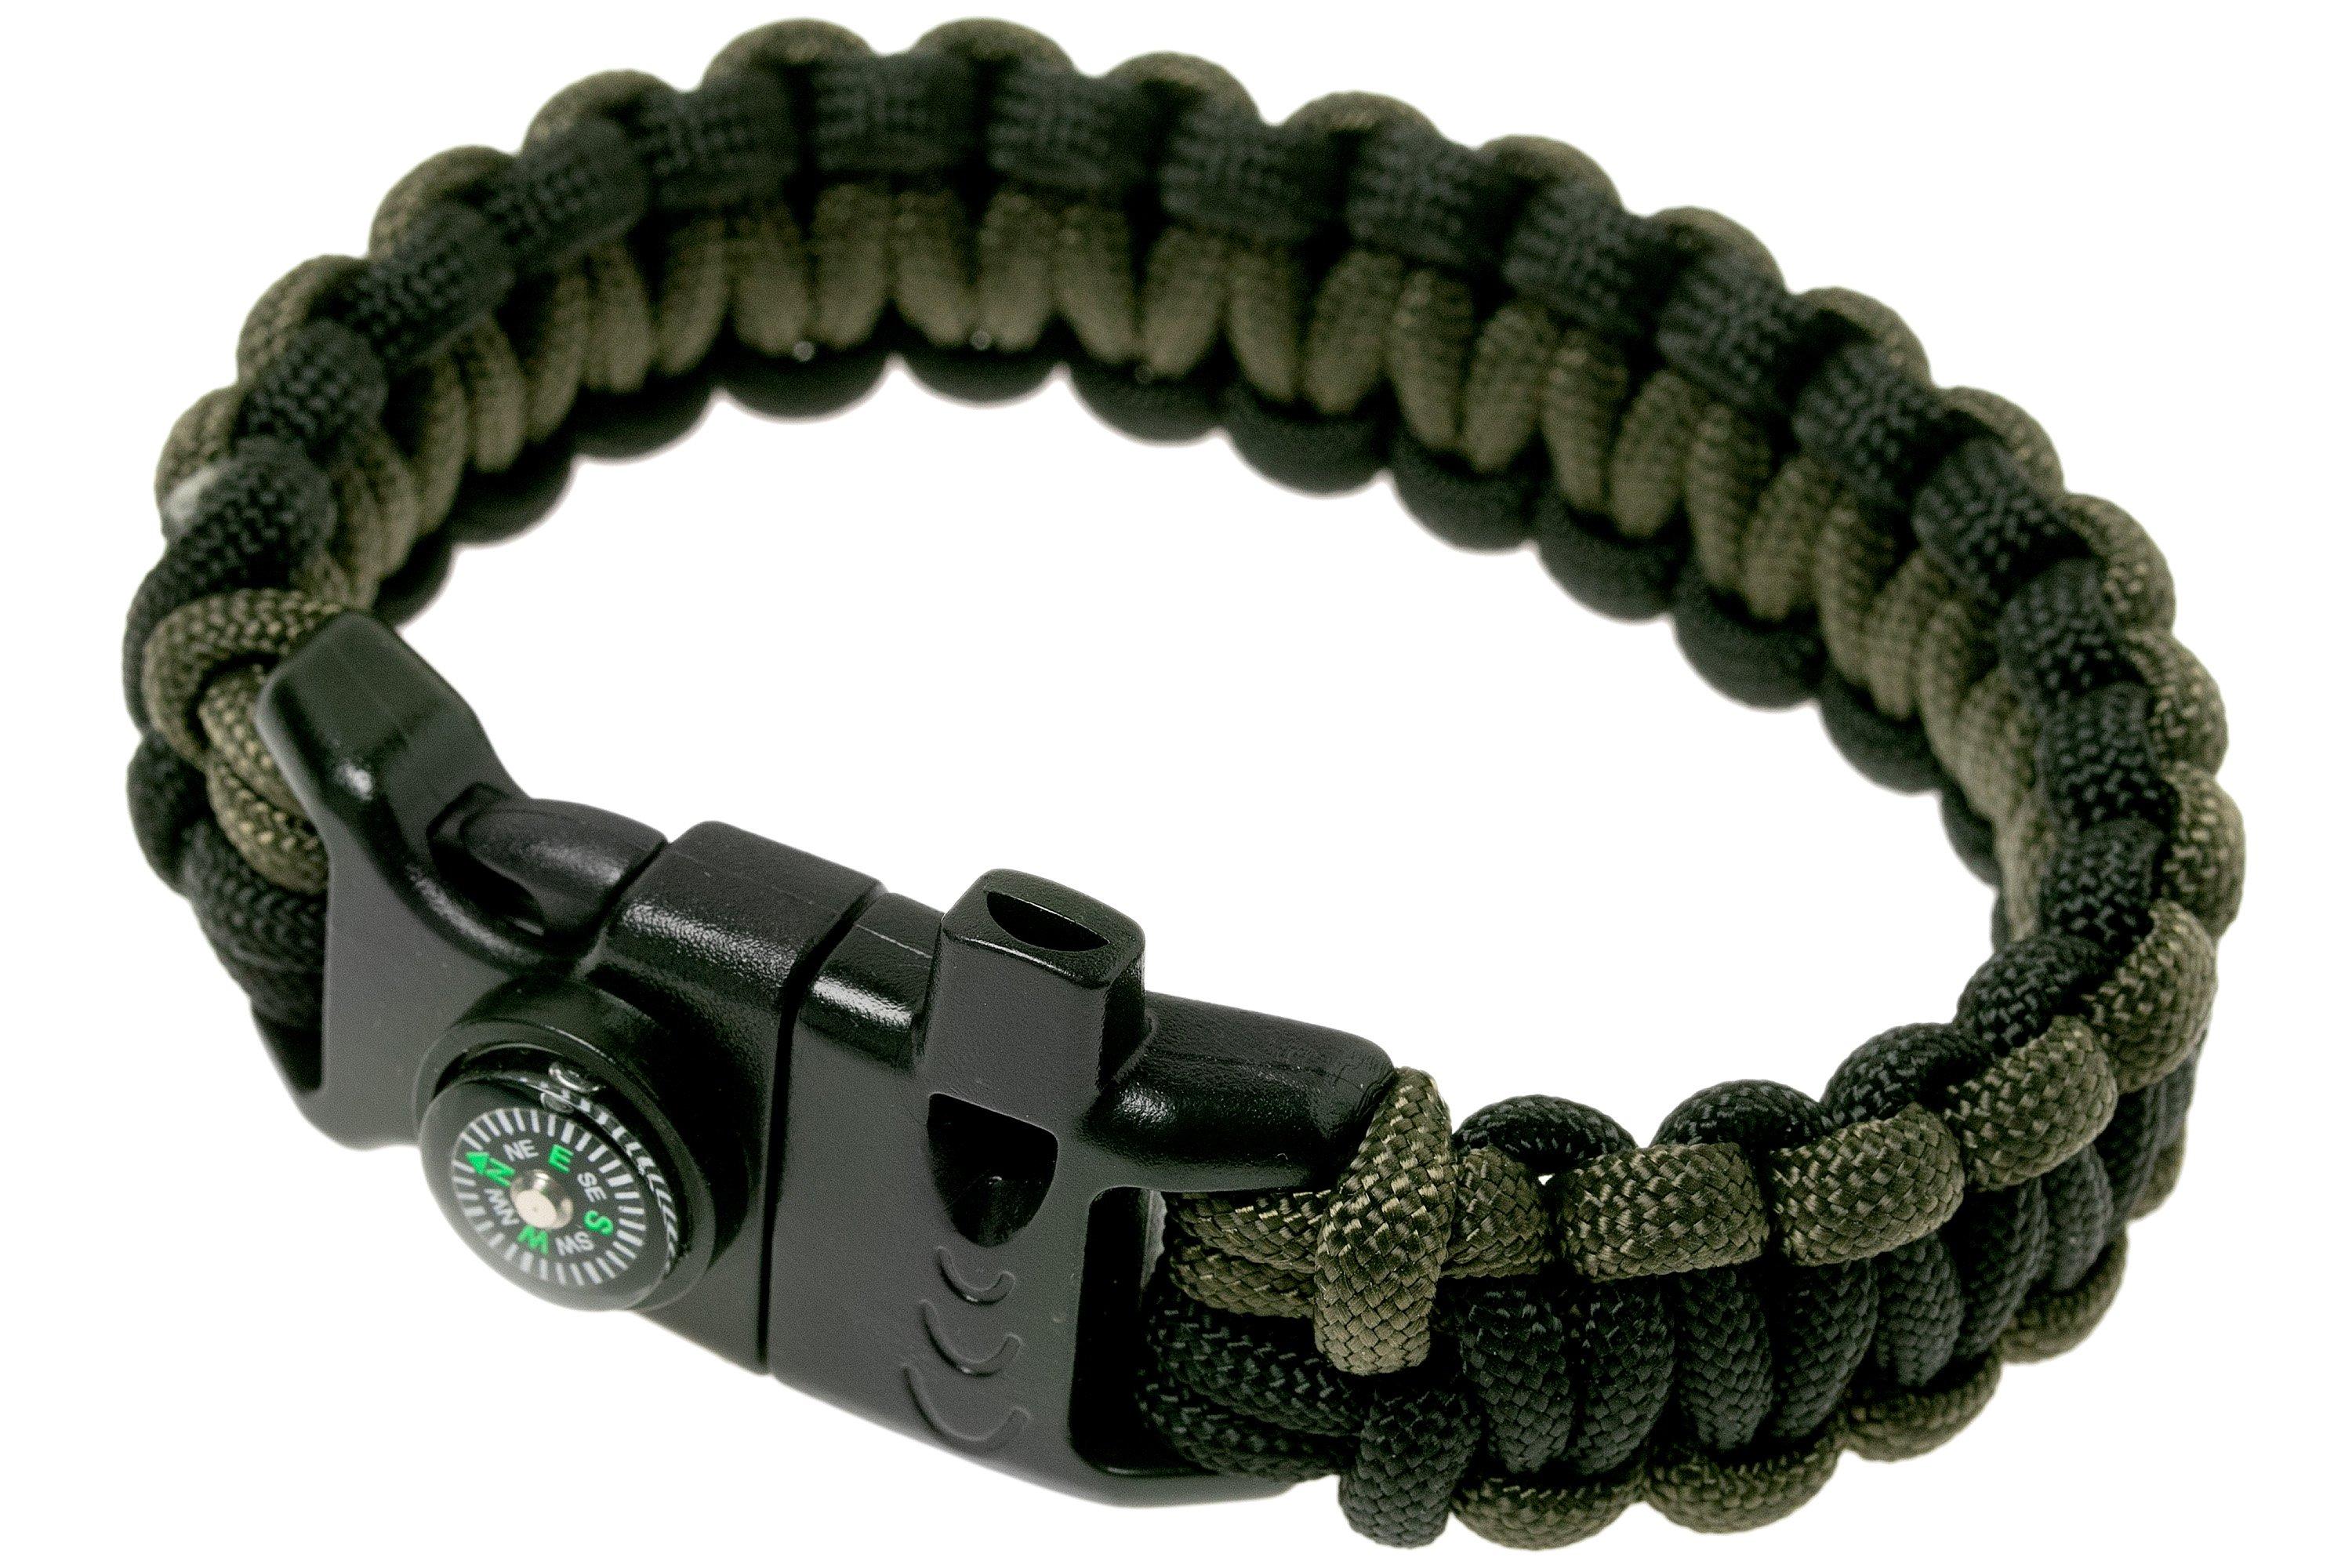 Besluit schuif kas Knivesandtools survival armband cobra wave, black and army green, inner  size 25 cm | Advantageously shopping at Knivesandtools.com